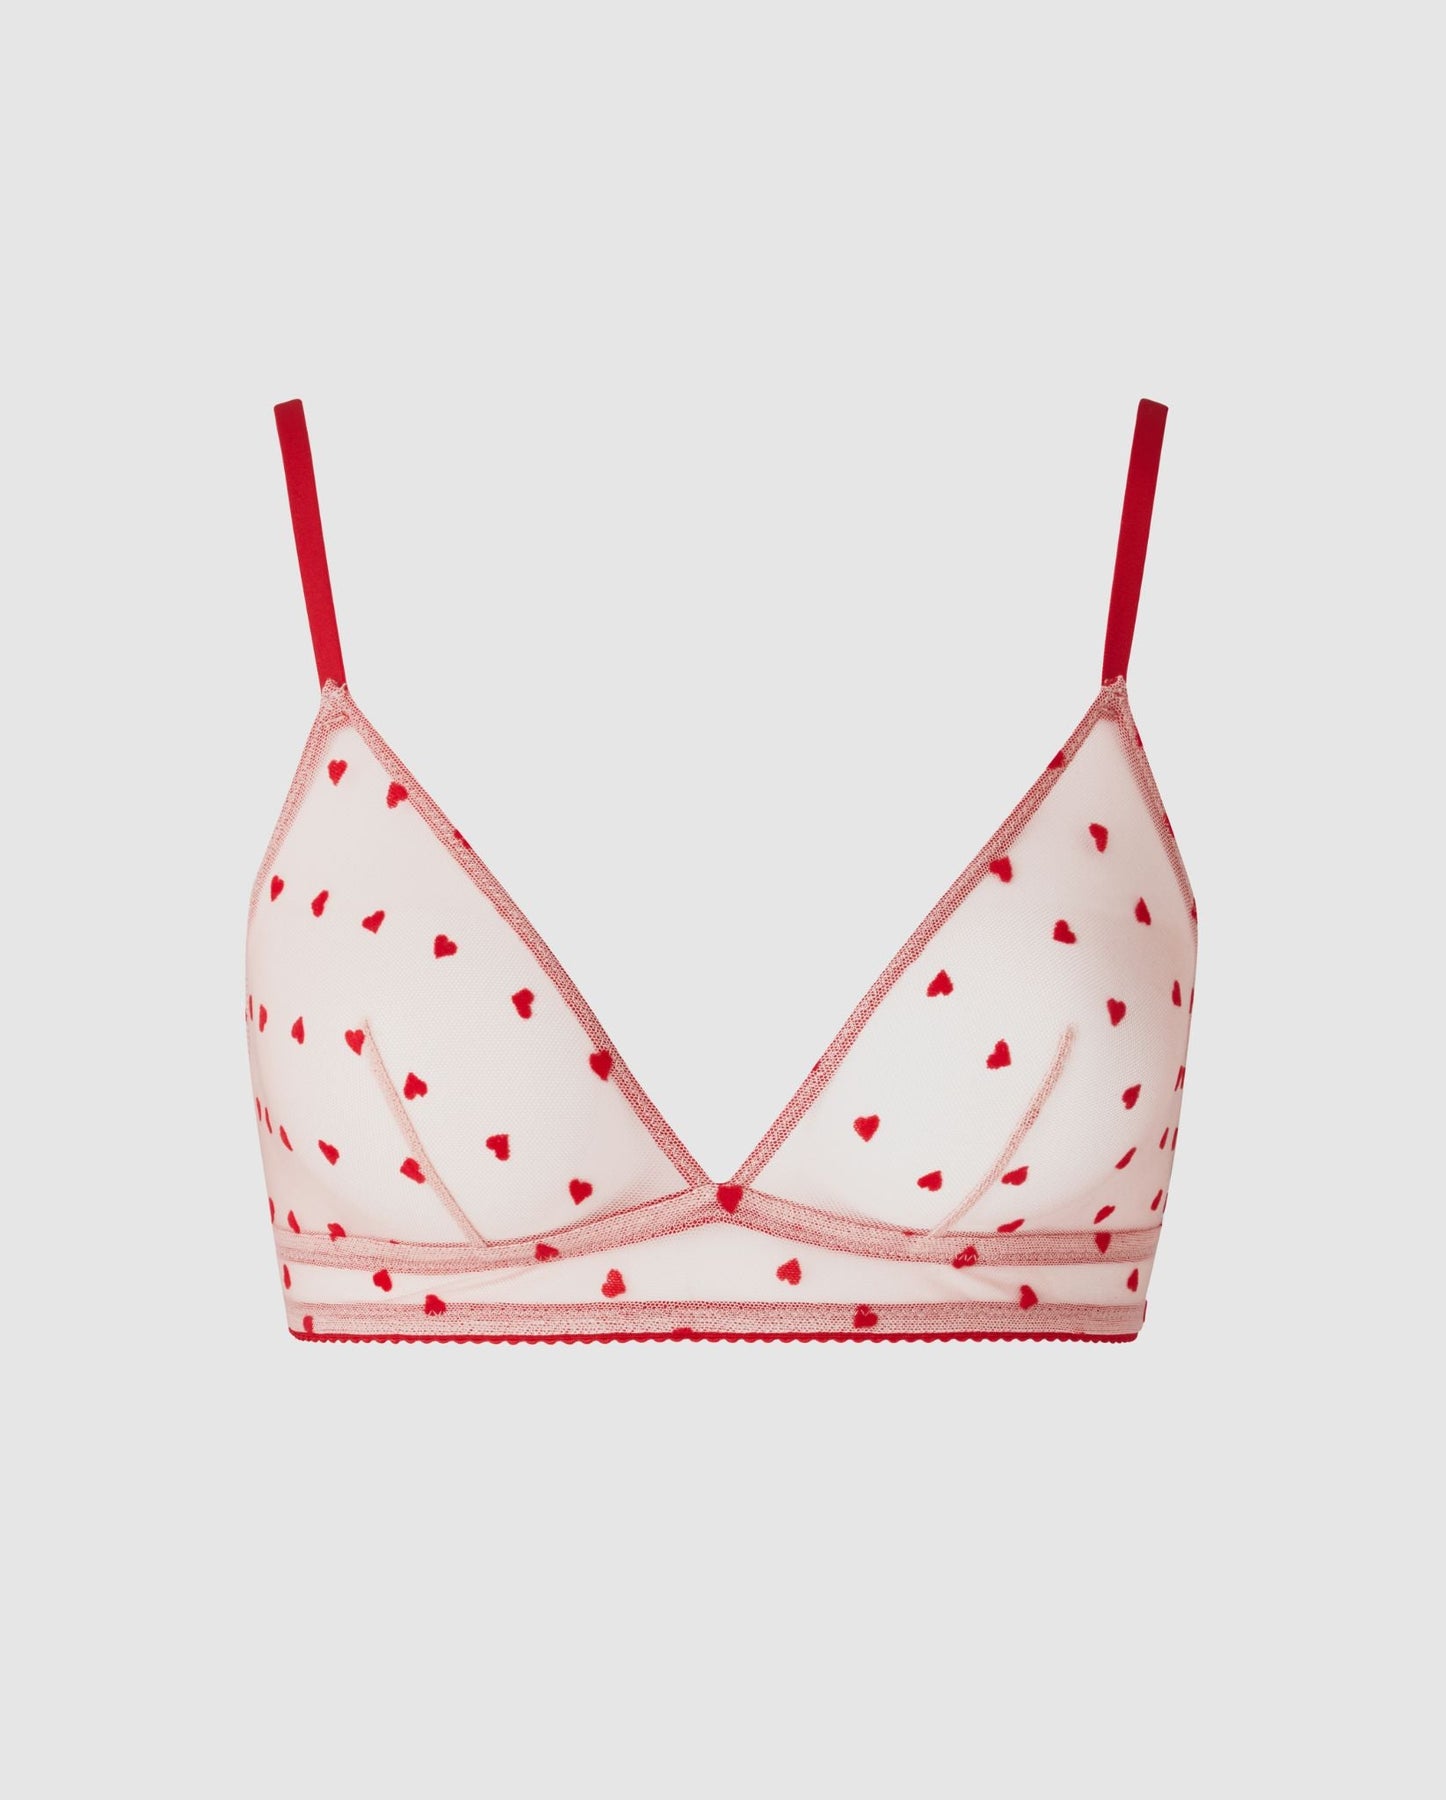 Red triangle bra with white polka dots Agnès B. x Dim